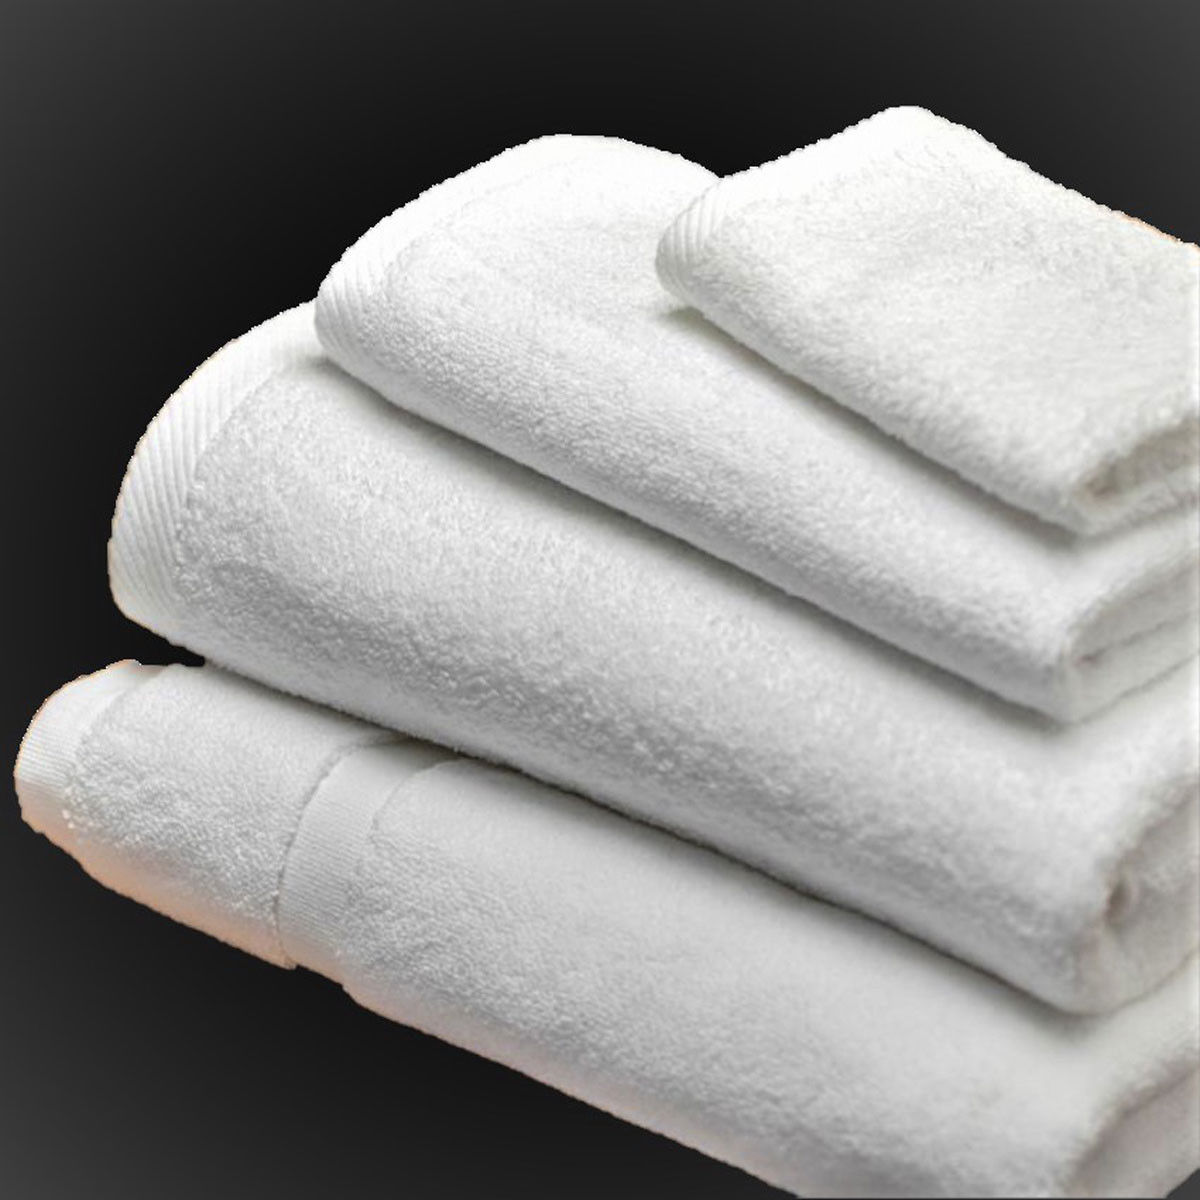 What's the feel of bulk bath towels wholesale?